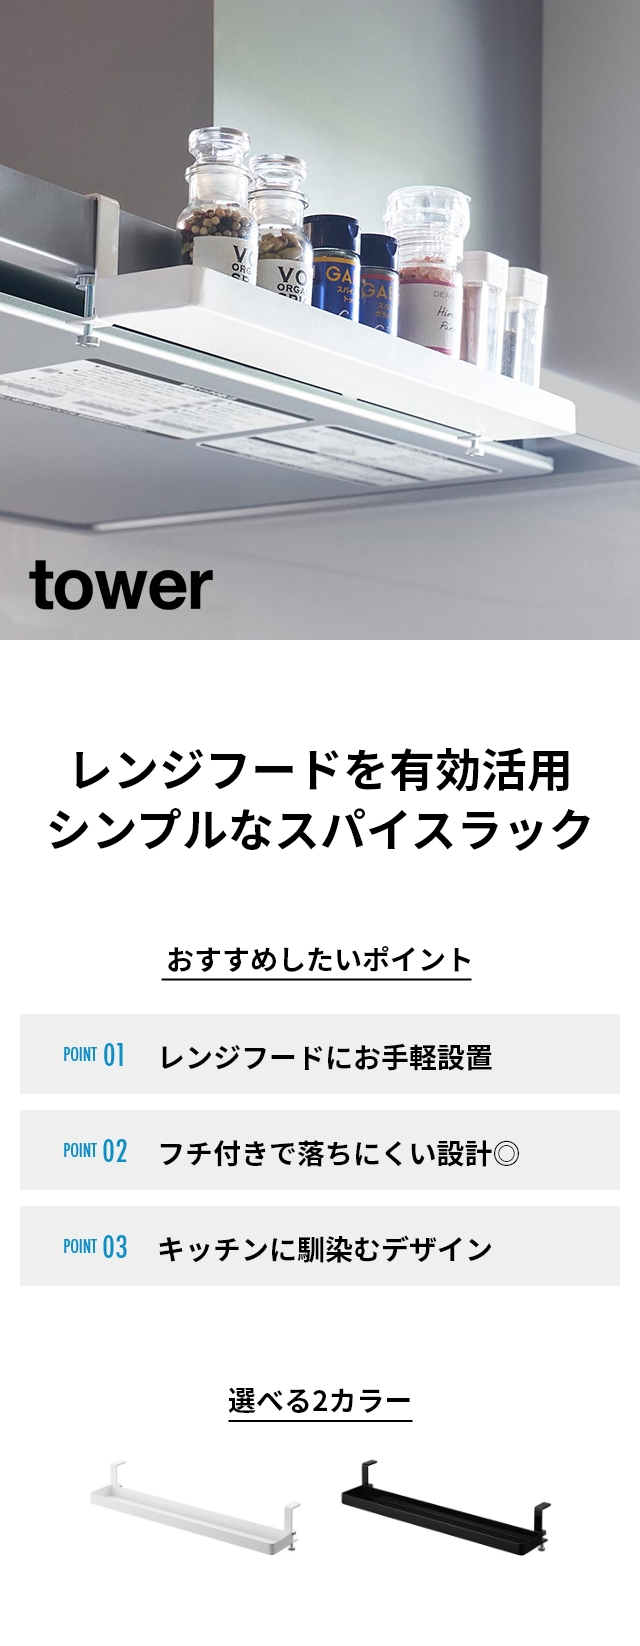 tower(タワー) レンジフード横スパイスラック